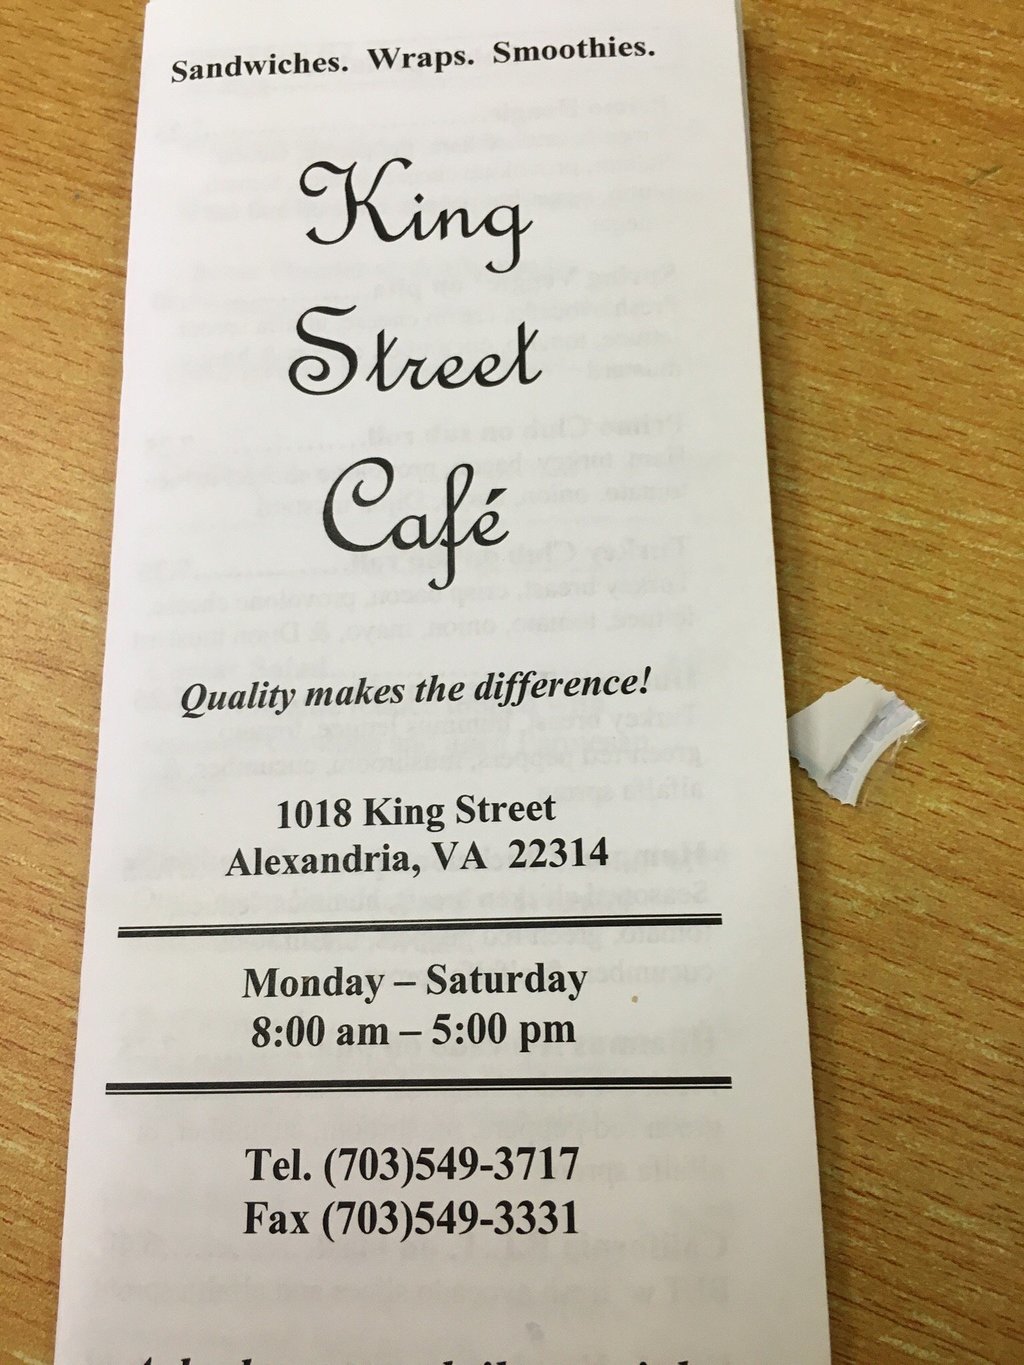 King Street Cafe